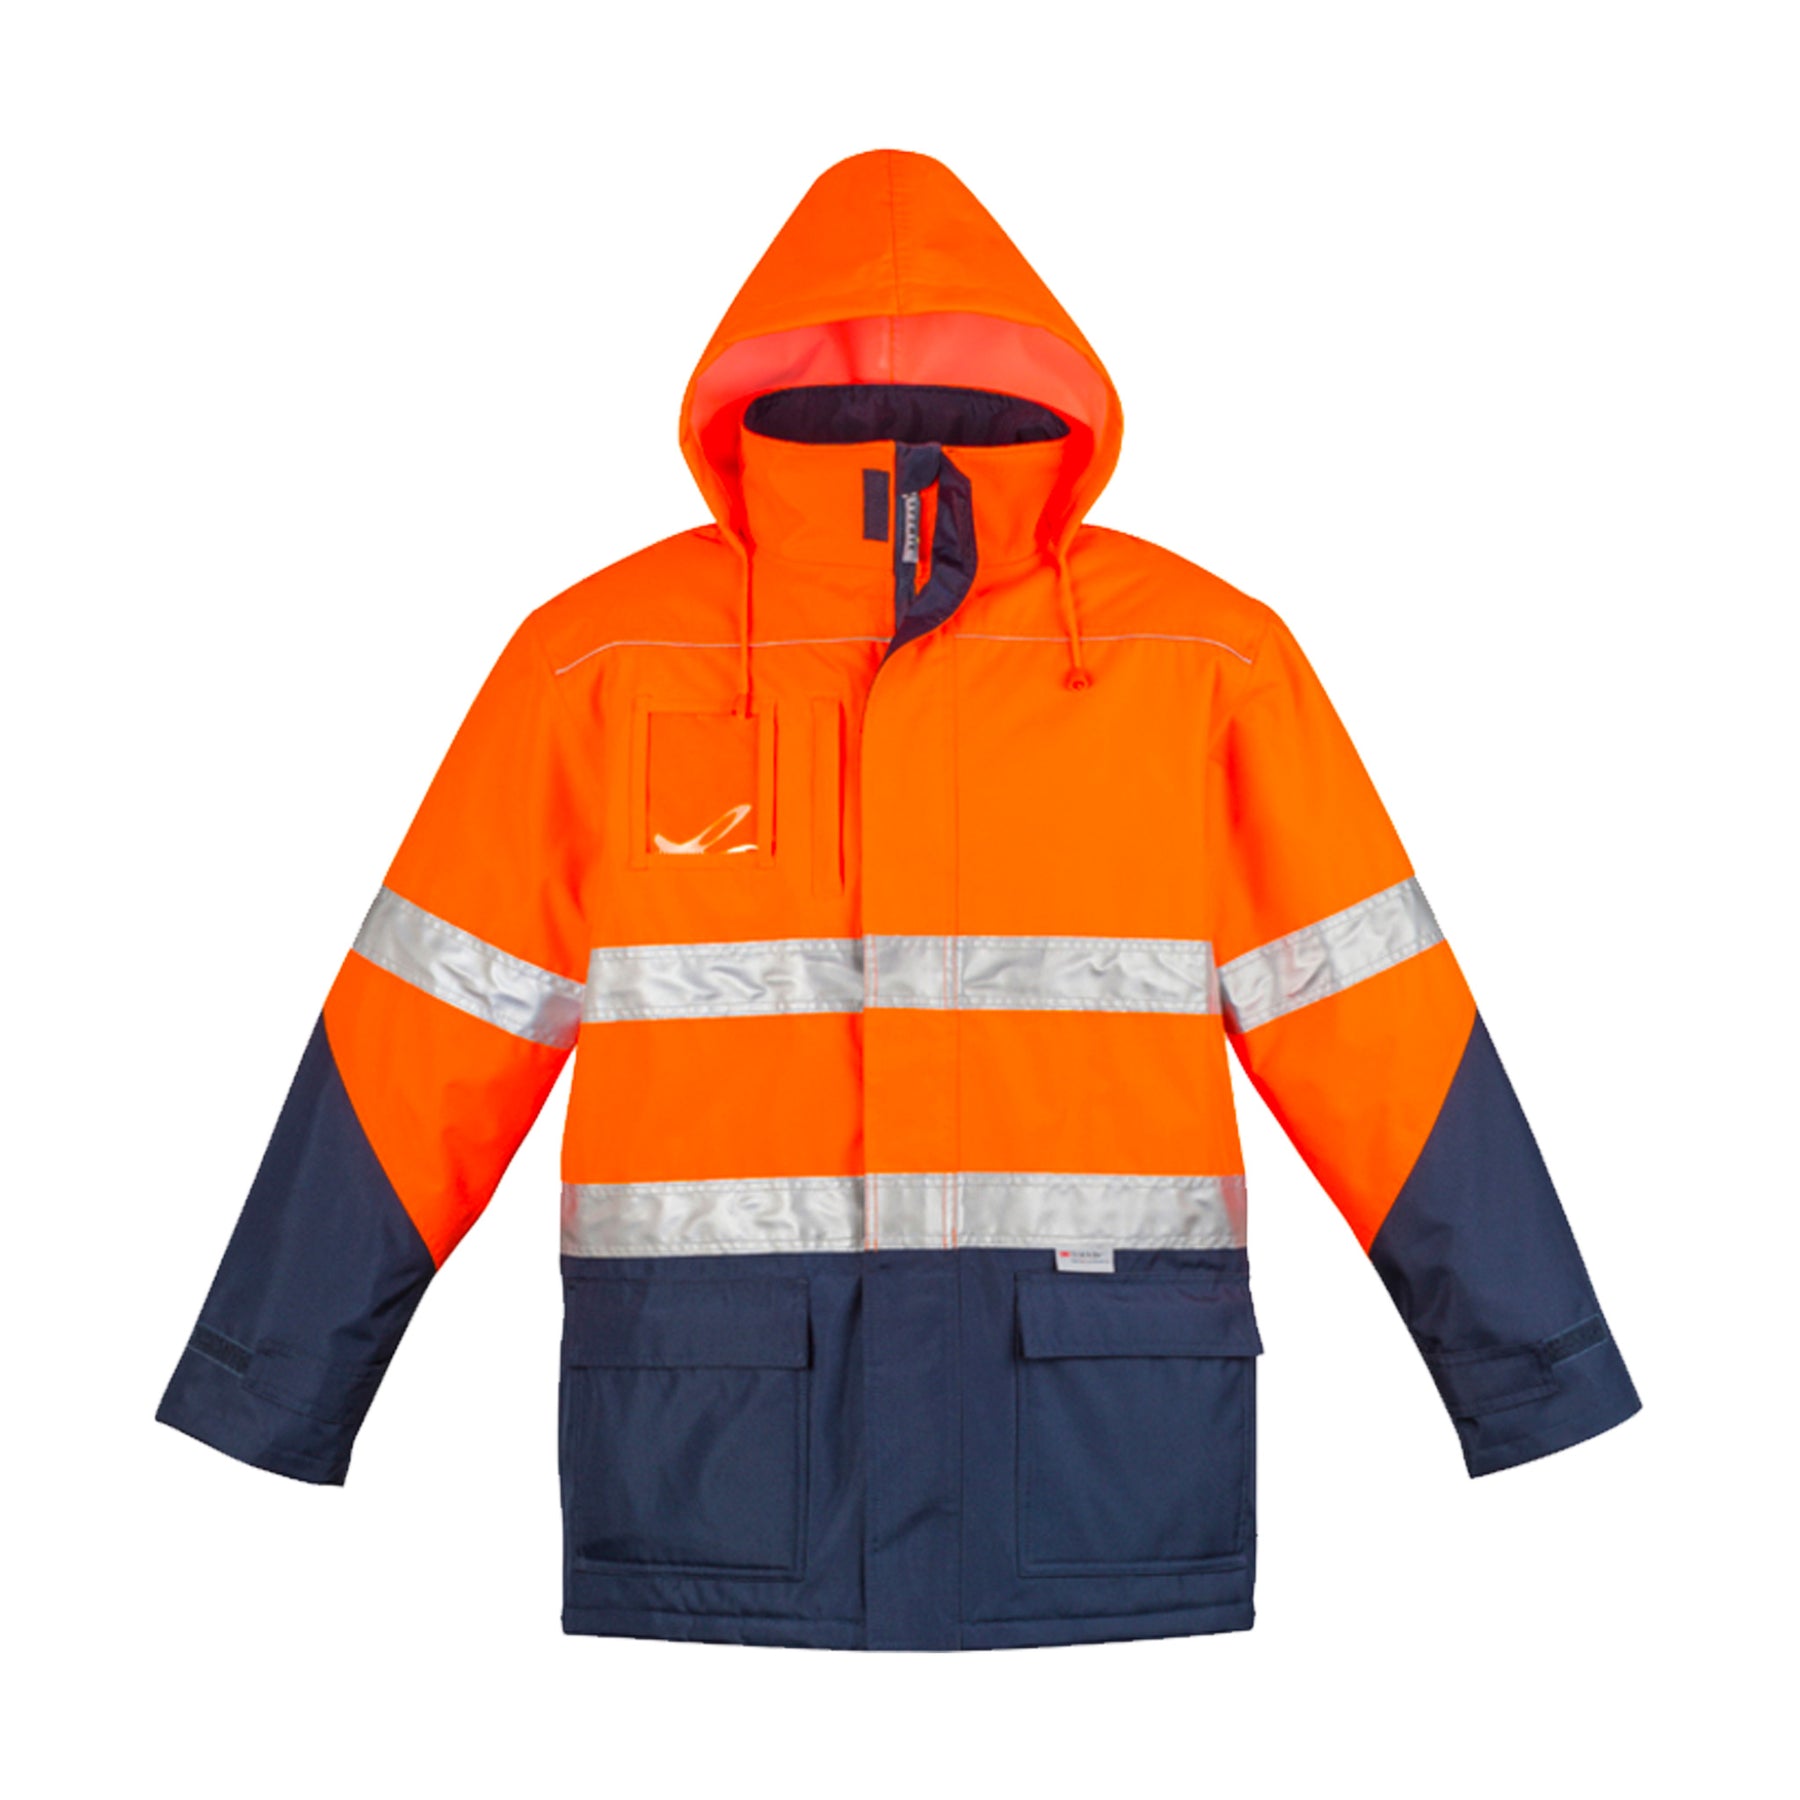 syzmik hi vis storm jacket in orange navy with hood